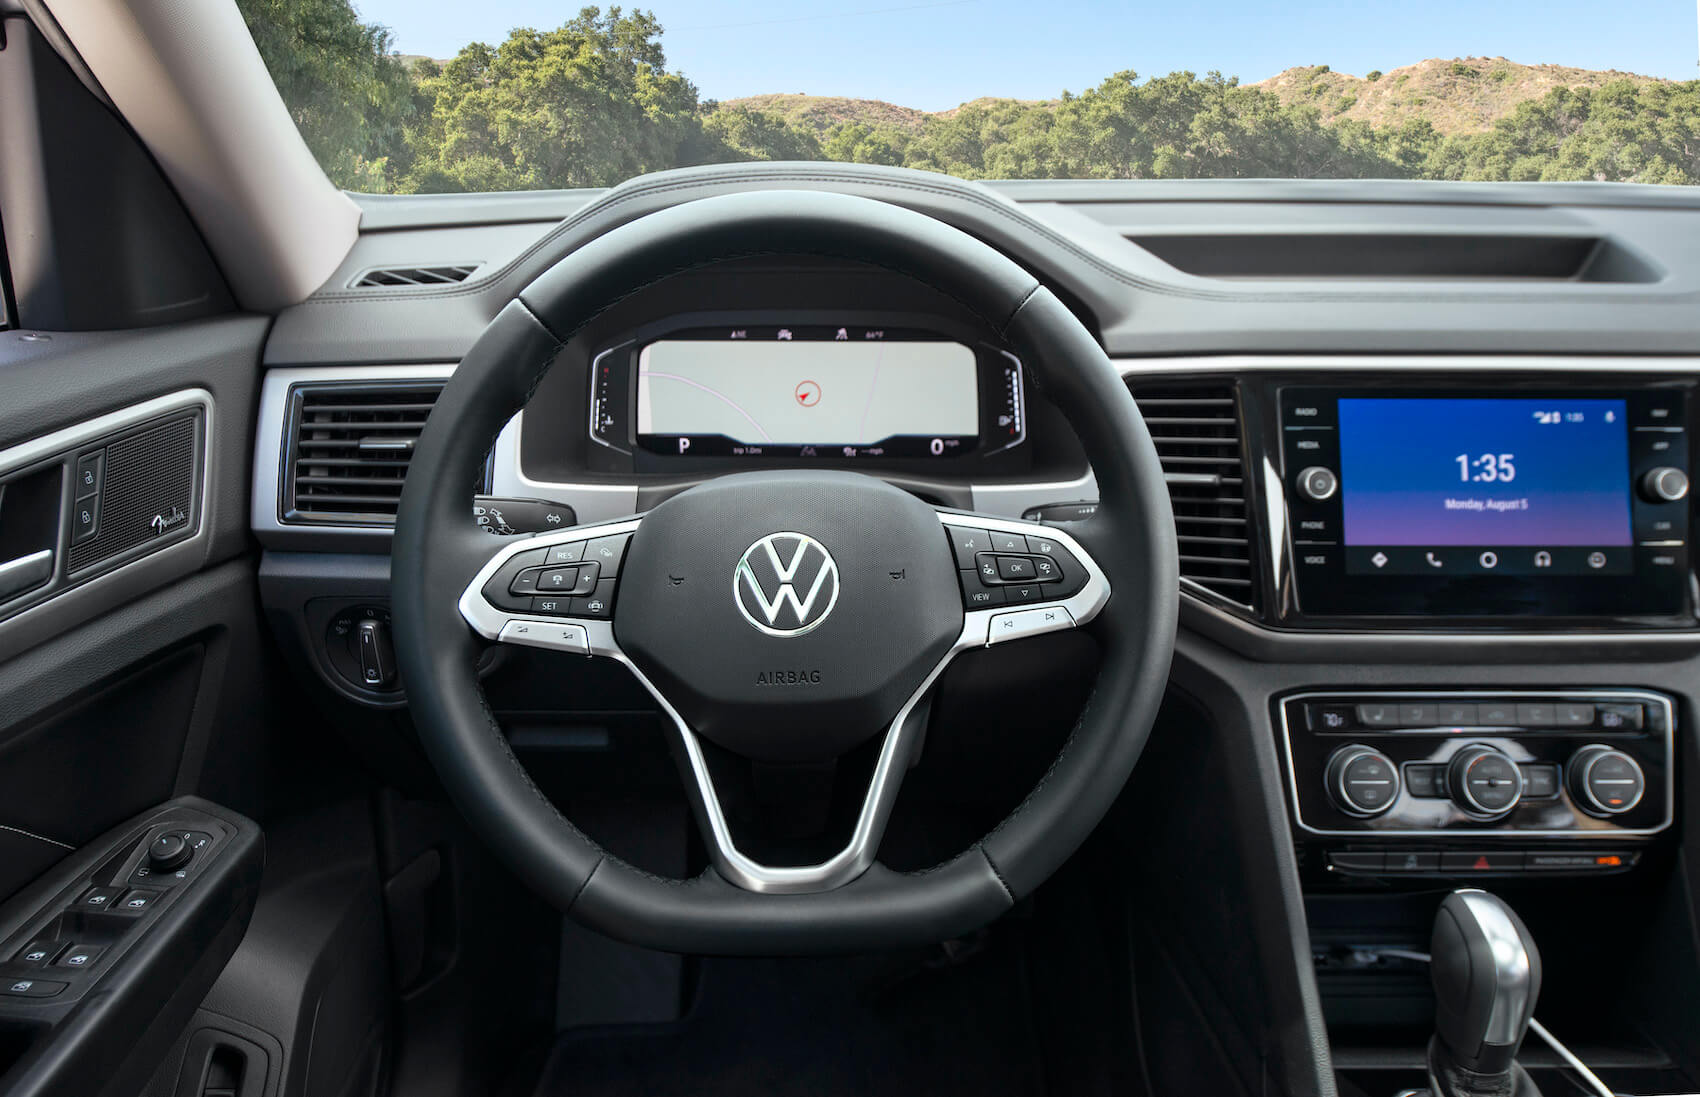 Volkswagen Atlas Interior Tech